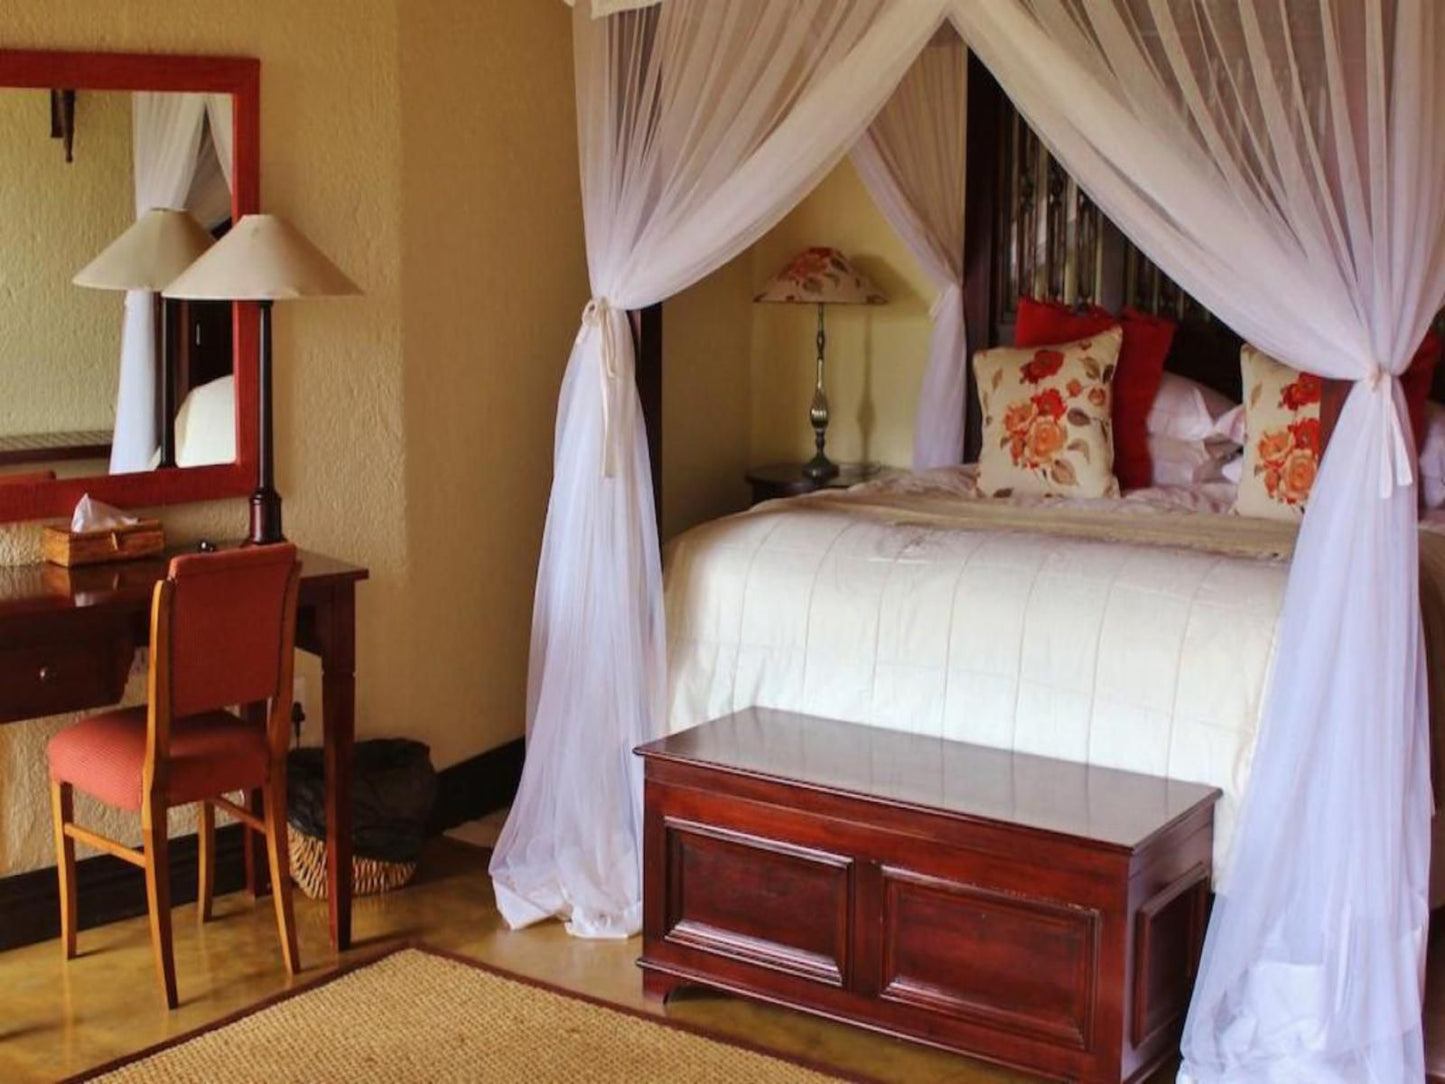 Tanamera Lodge Hazyview Mpumalanga South Africa Bedroom